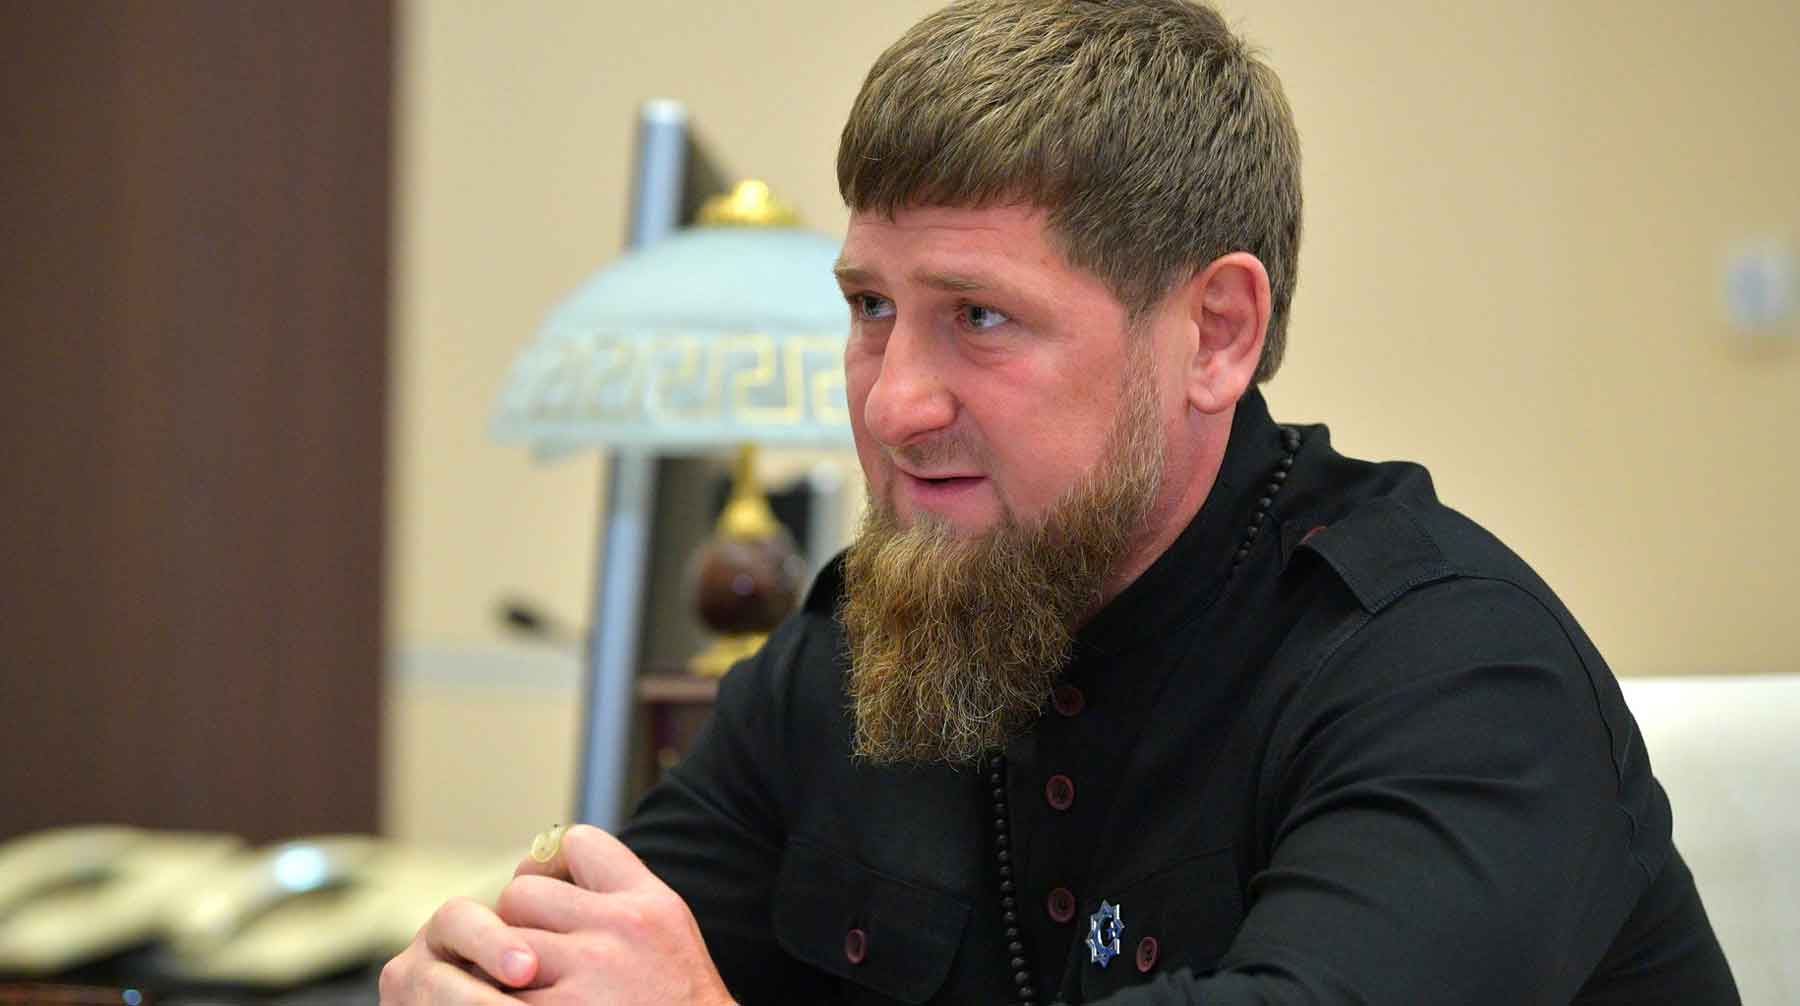 Никто в результате ЧП не пострадал, написал глава Чечни Фото: © GLOBAL LOOK press / Kremlin Pool